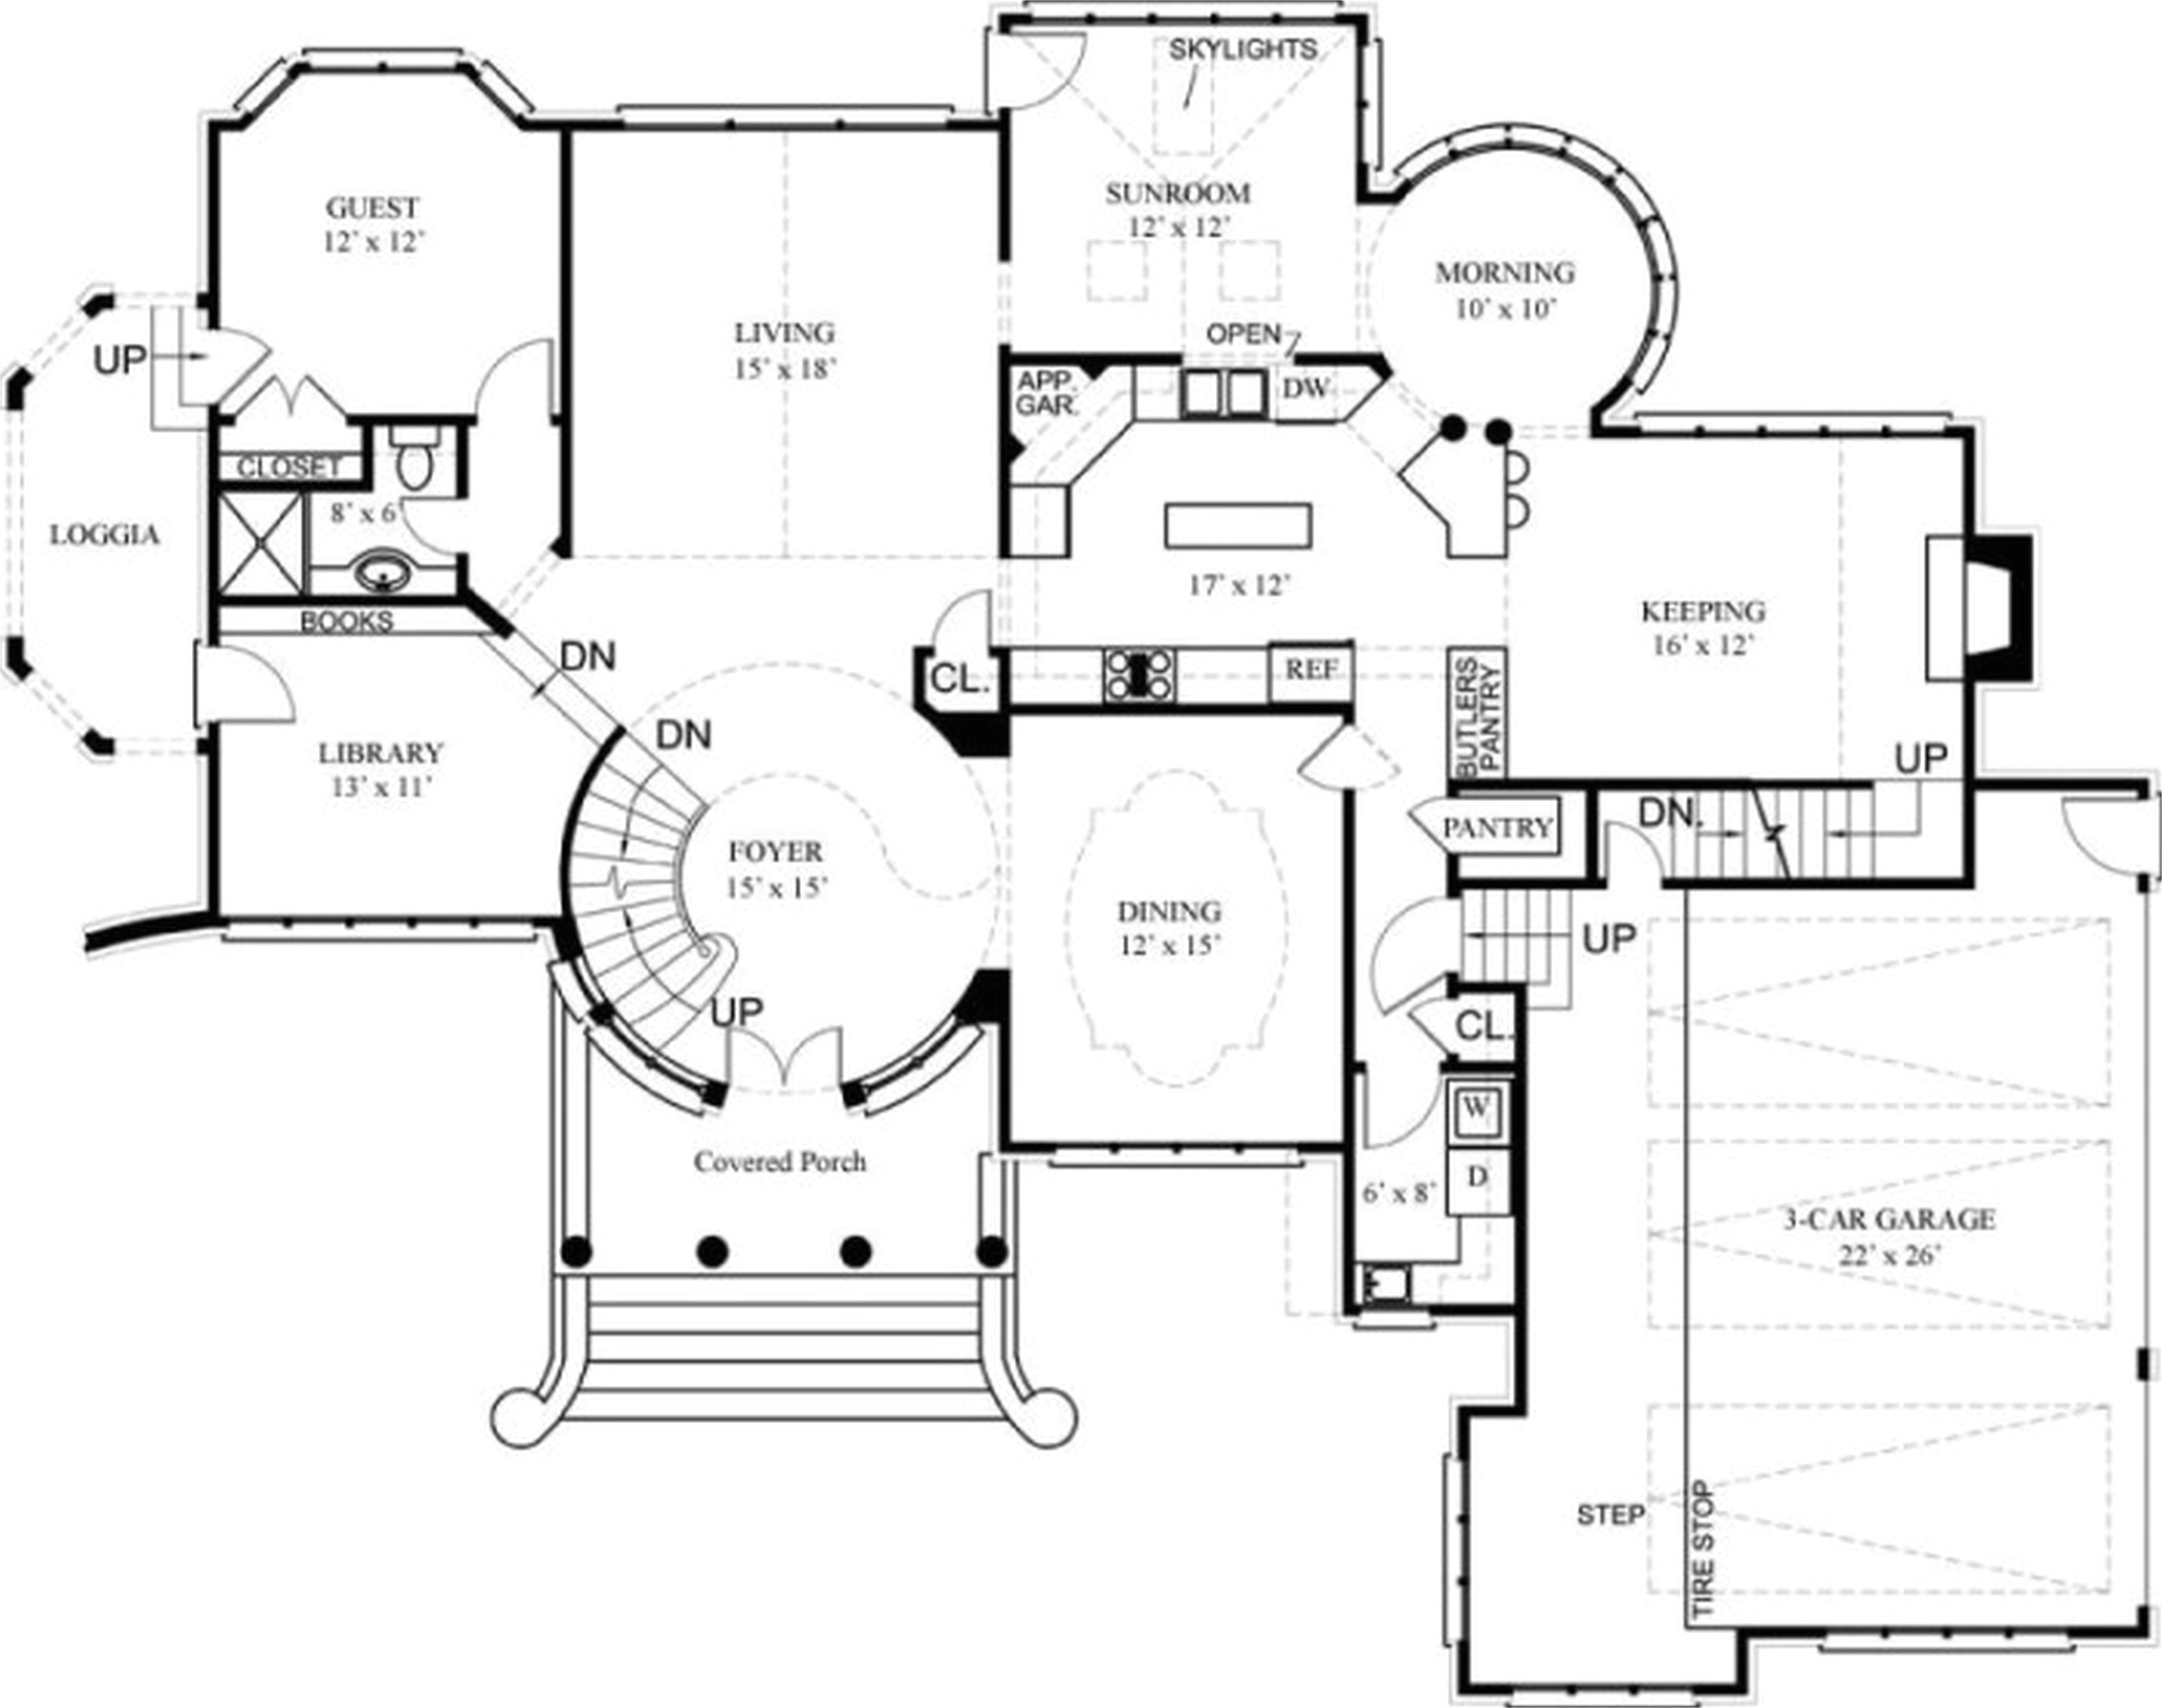 designs and floor plans tritmonk design photo gallery for modern bedroom interior floor plan s layouts furniture drawing